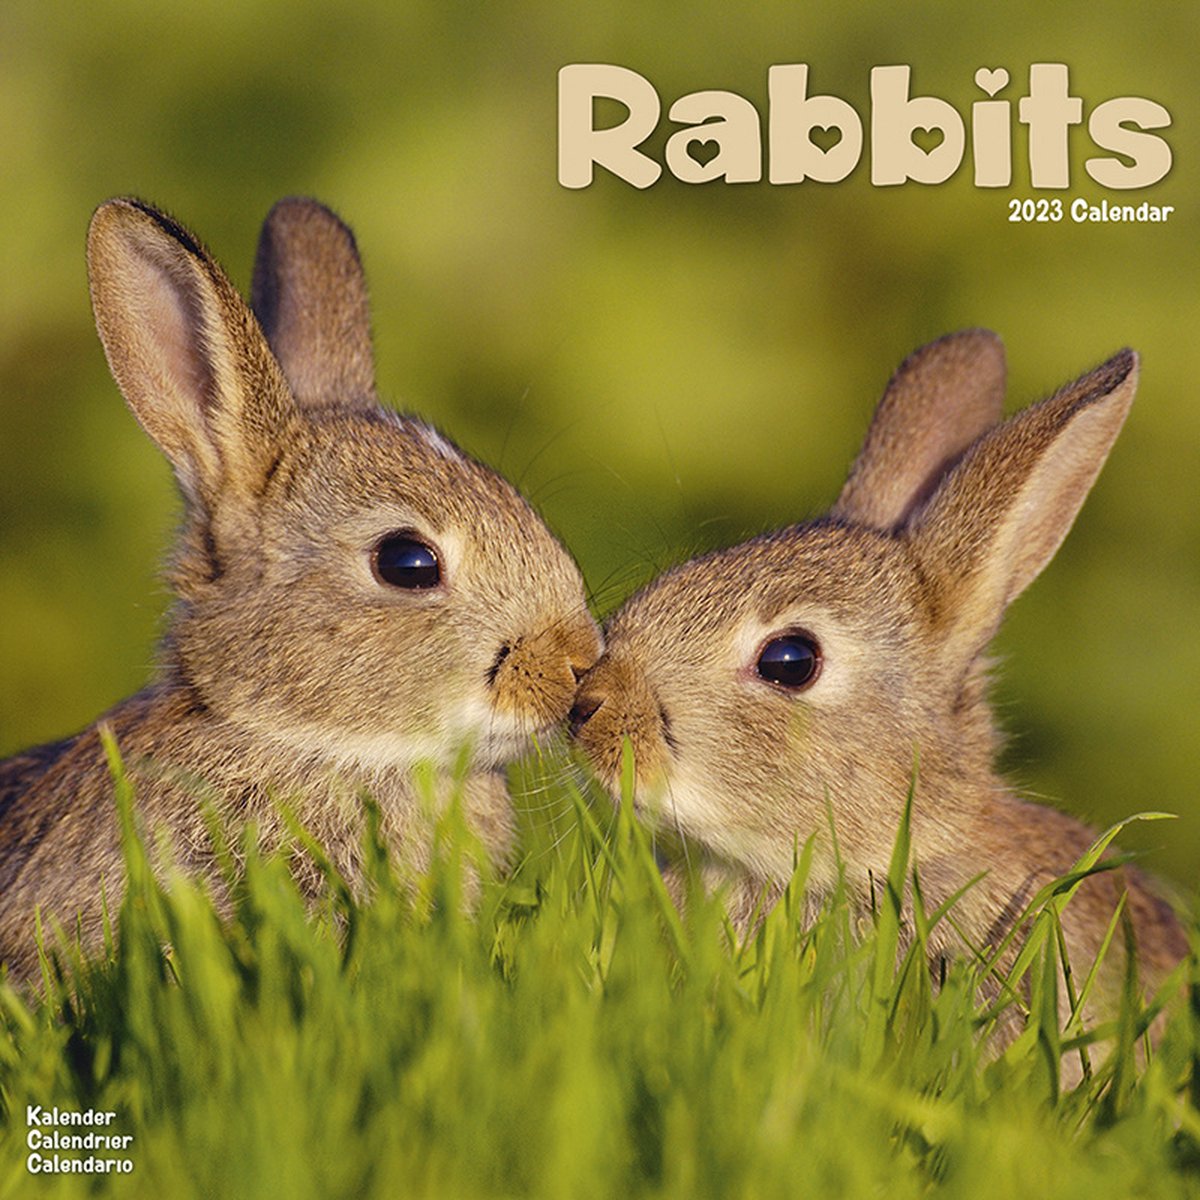 Rabbits Kalender 2023